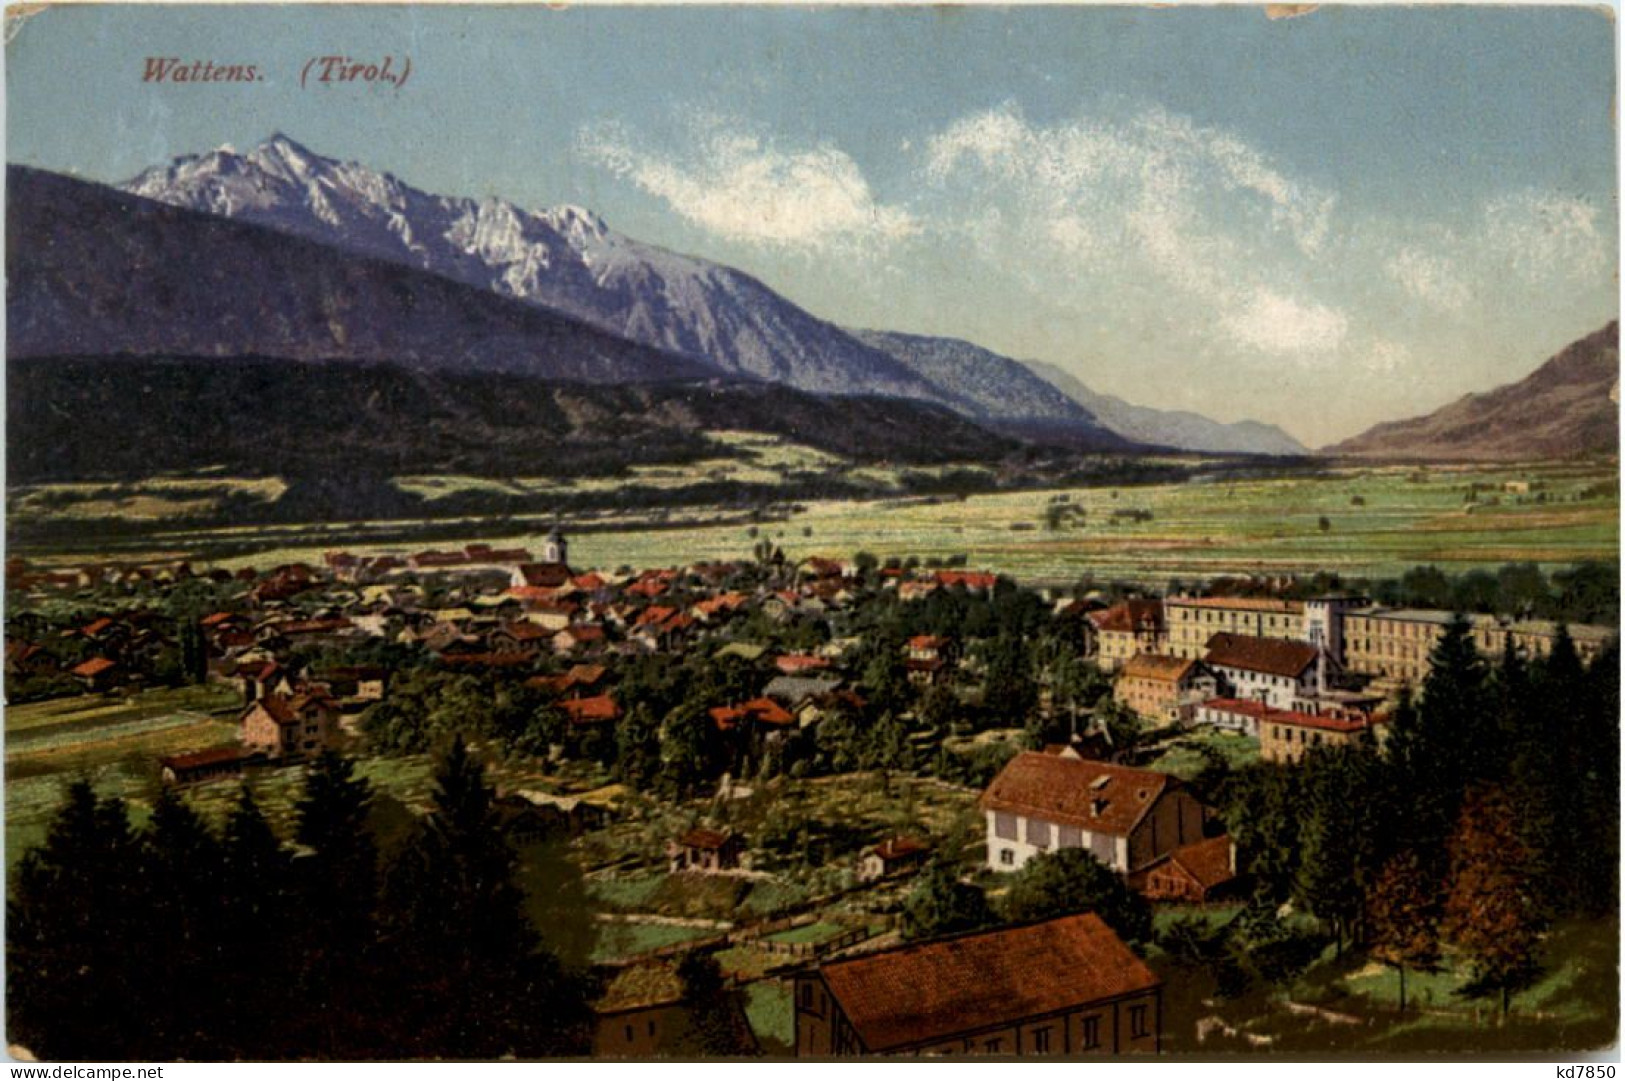 Wattens Tirol - Imst